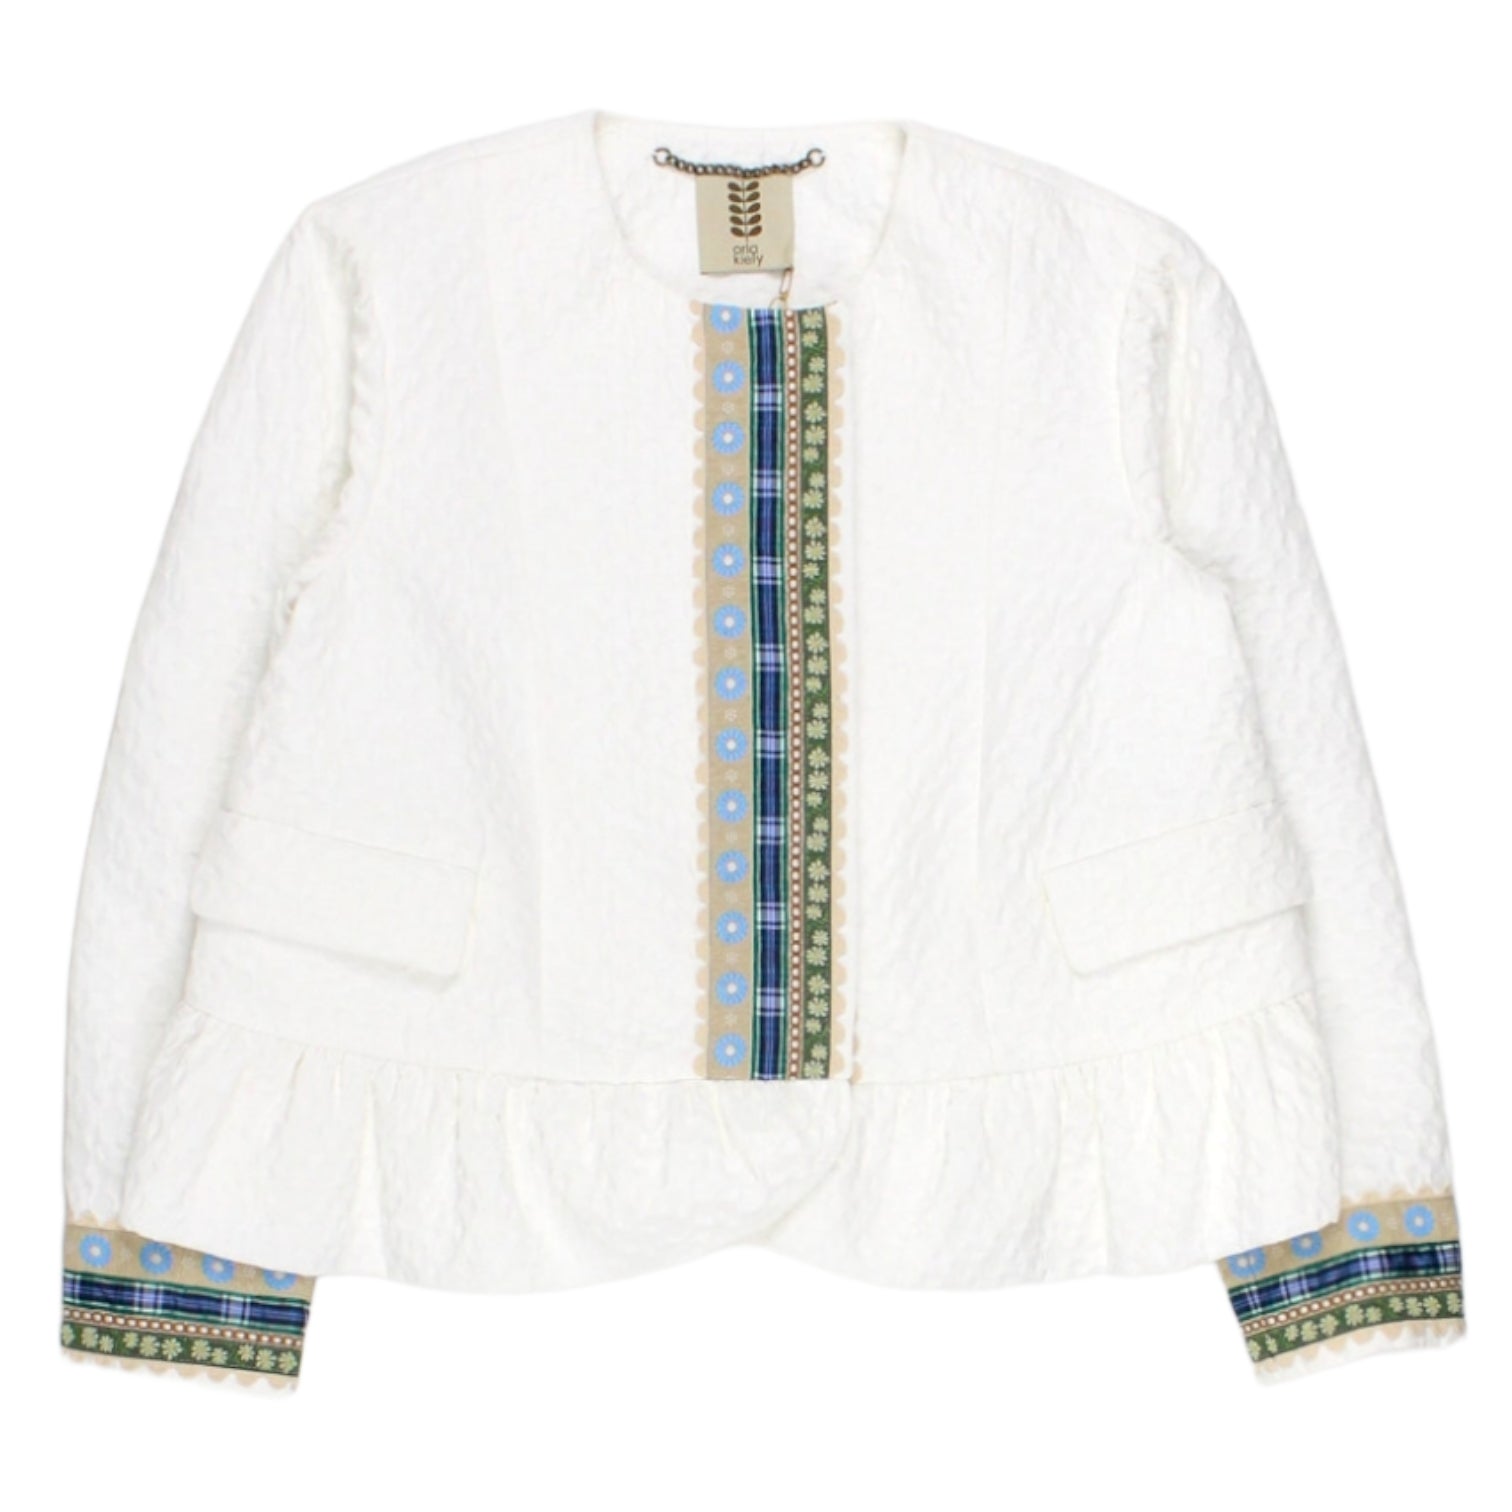 Orla Kiely White Floral Jacquard Jacket